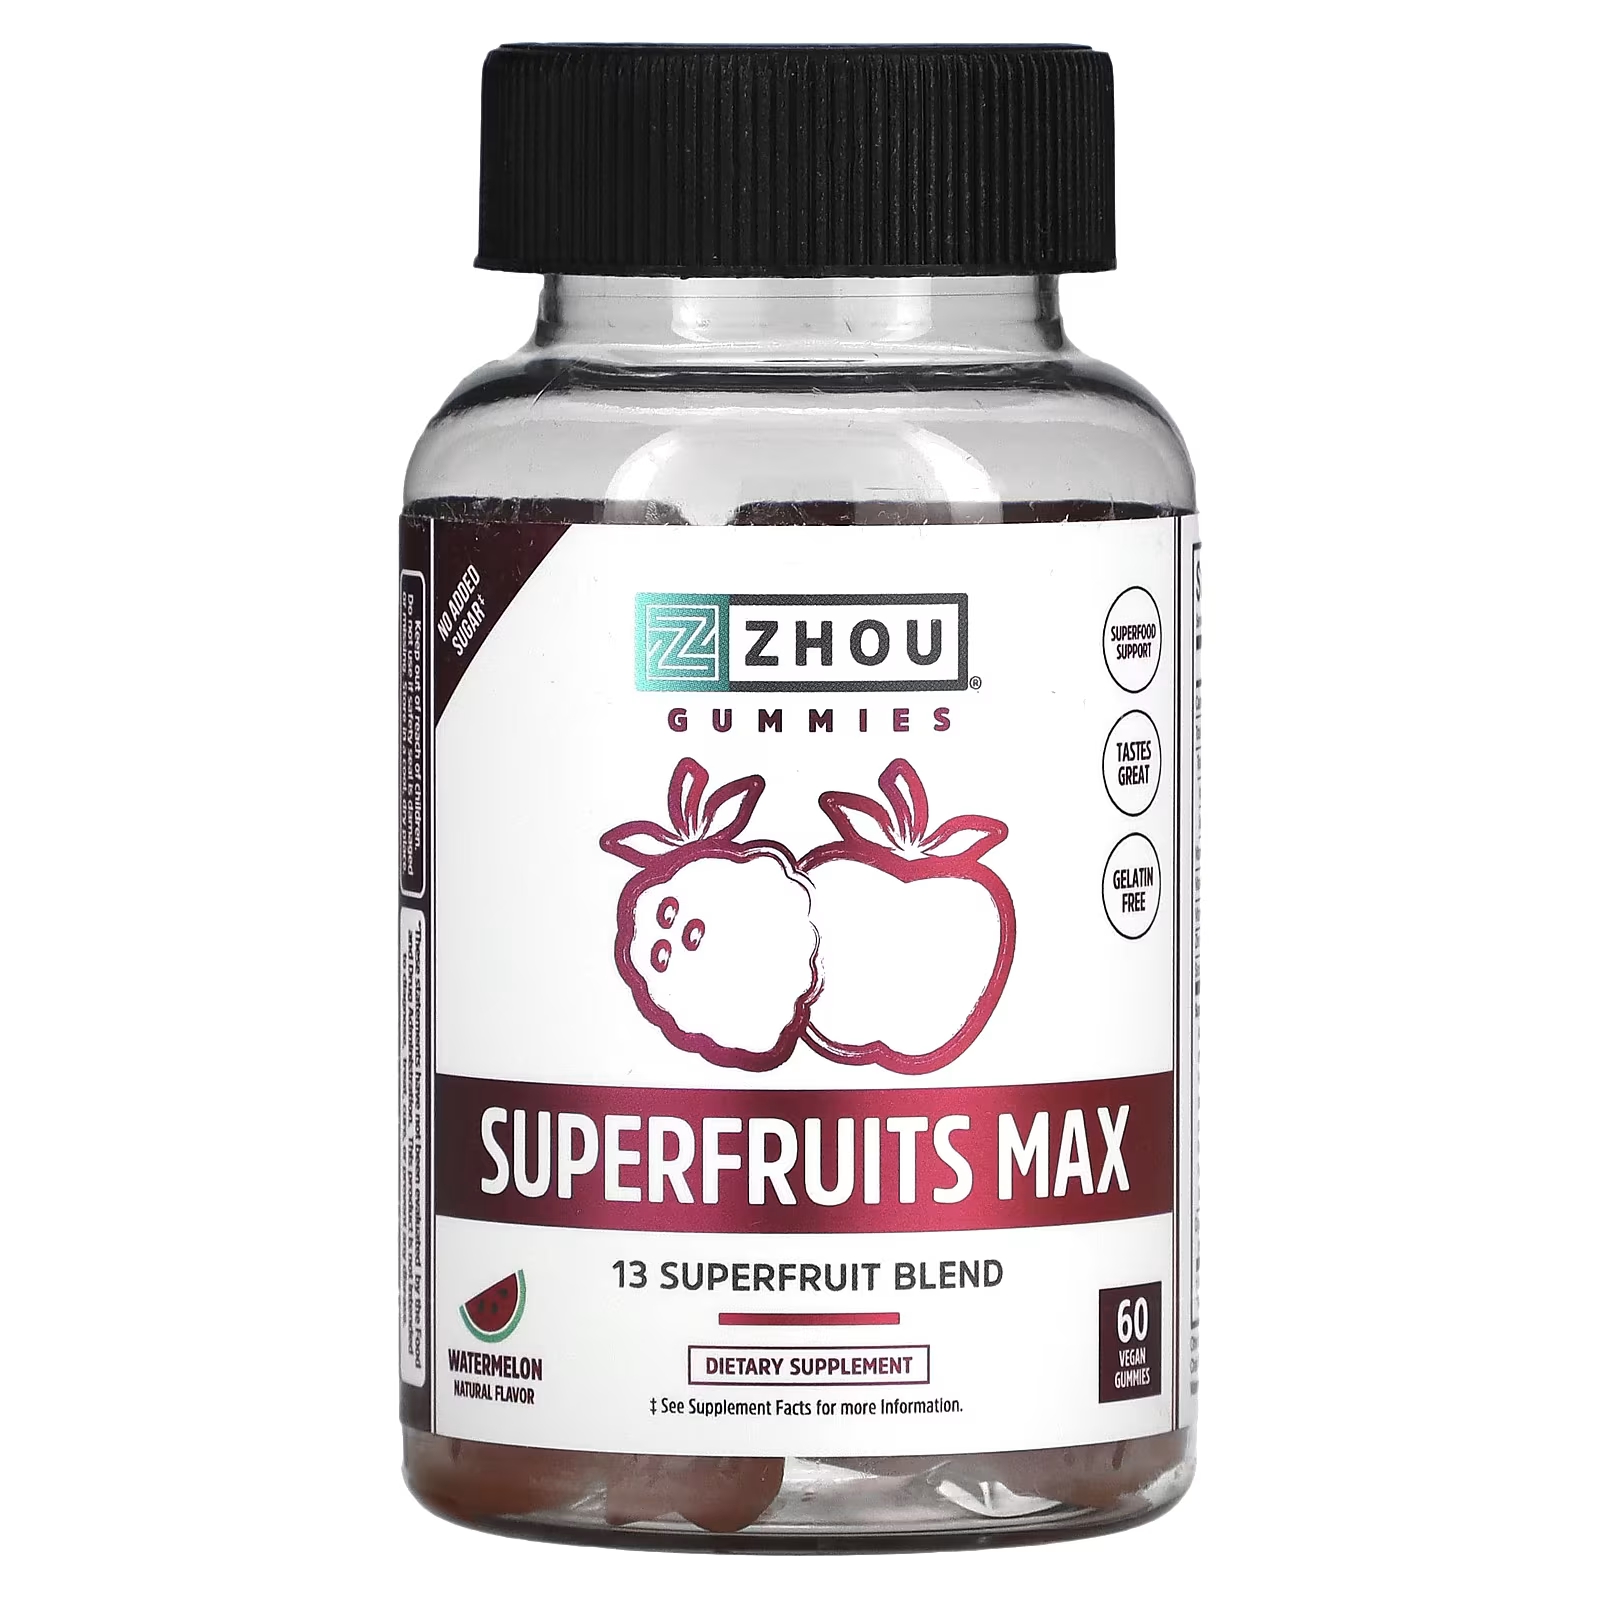 Пищевая добавка Zhou Nutrition Superfruits Max Watermelon, 60 жевательных конфет пищевая добавка zhou nutrition iron beard 60 капсул